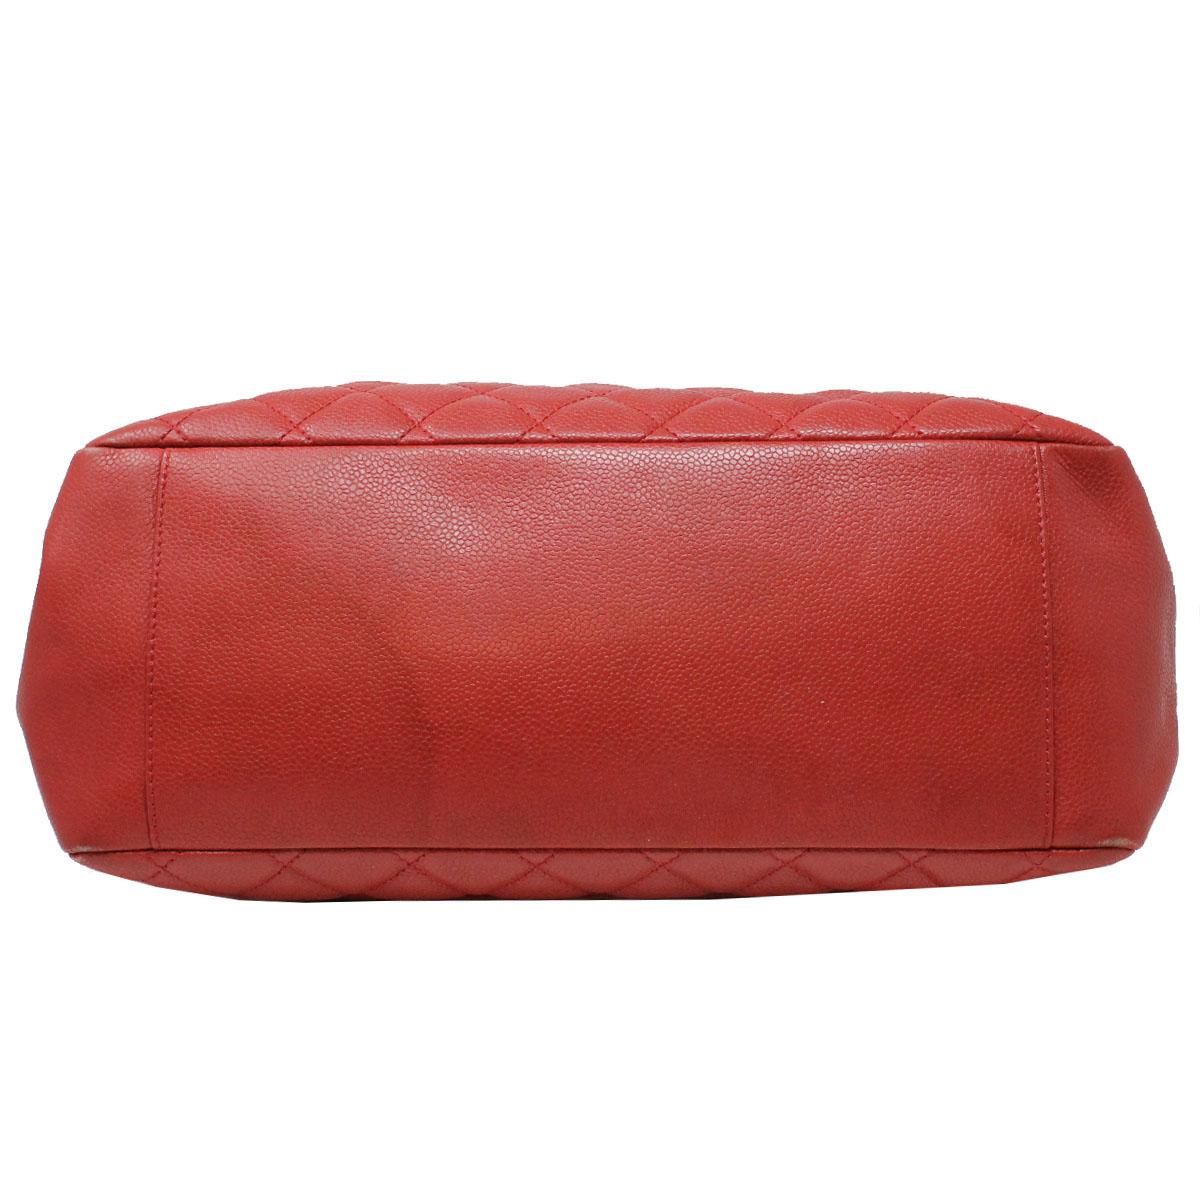 Chanel Grand Shopper Tote GST Red Caviar Leather Shoulder Bag no. 15 2